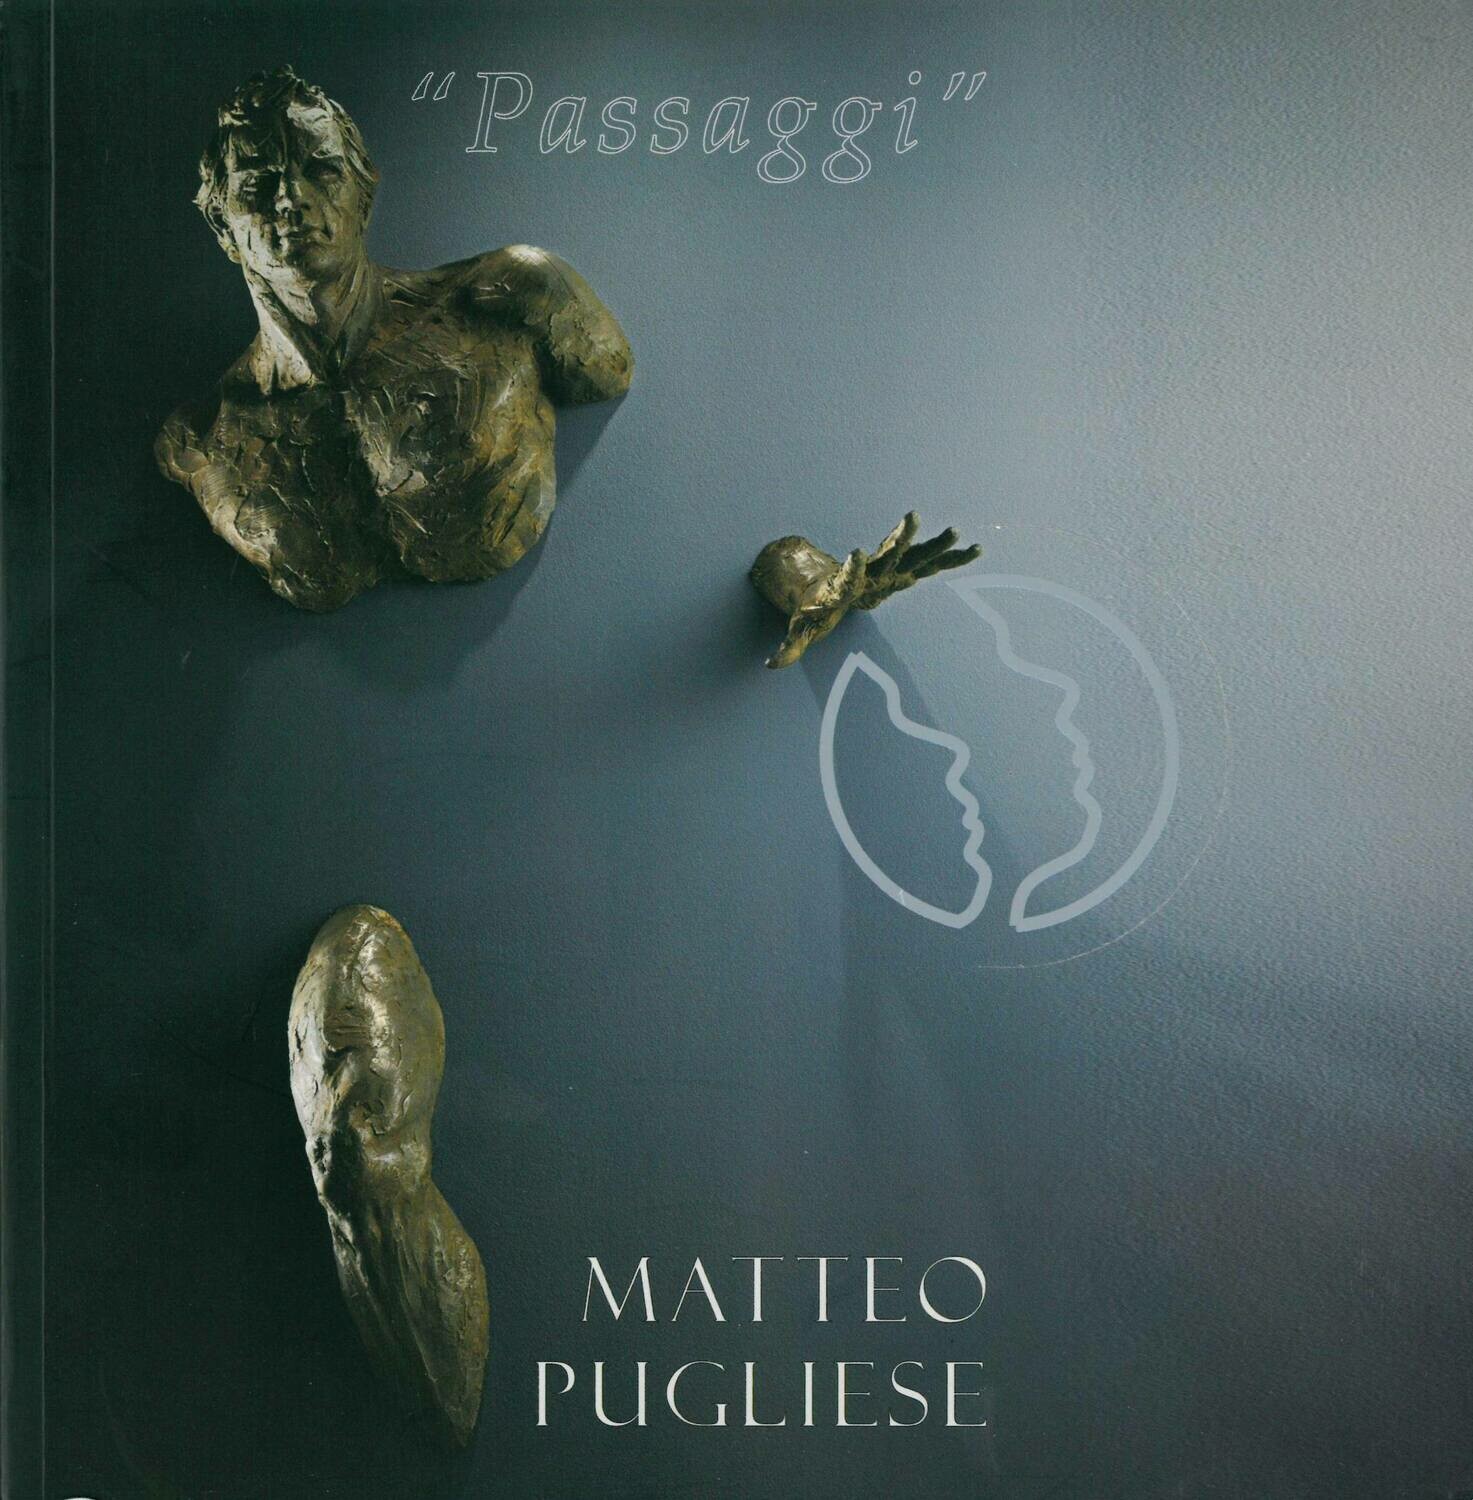 PASSAGGI, Matteo Pugliese